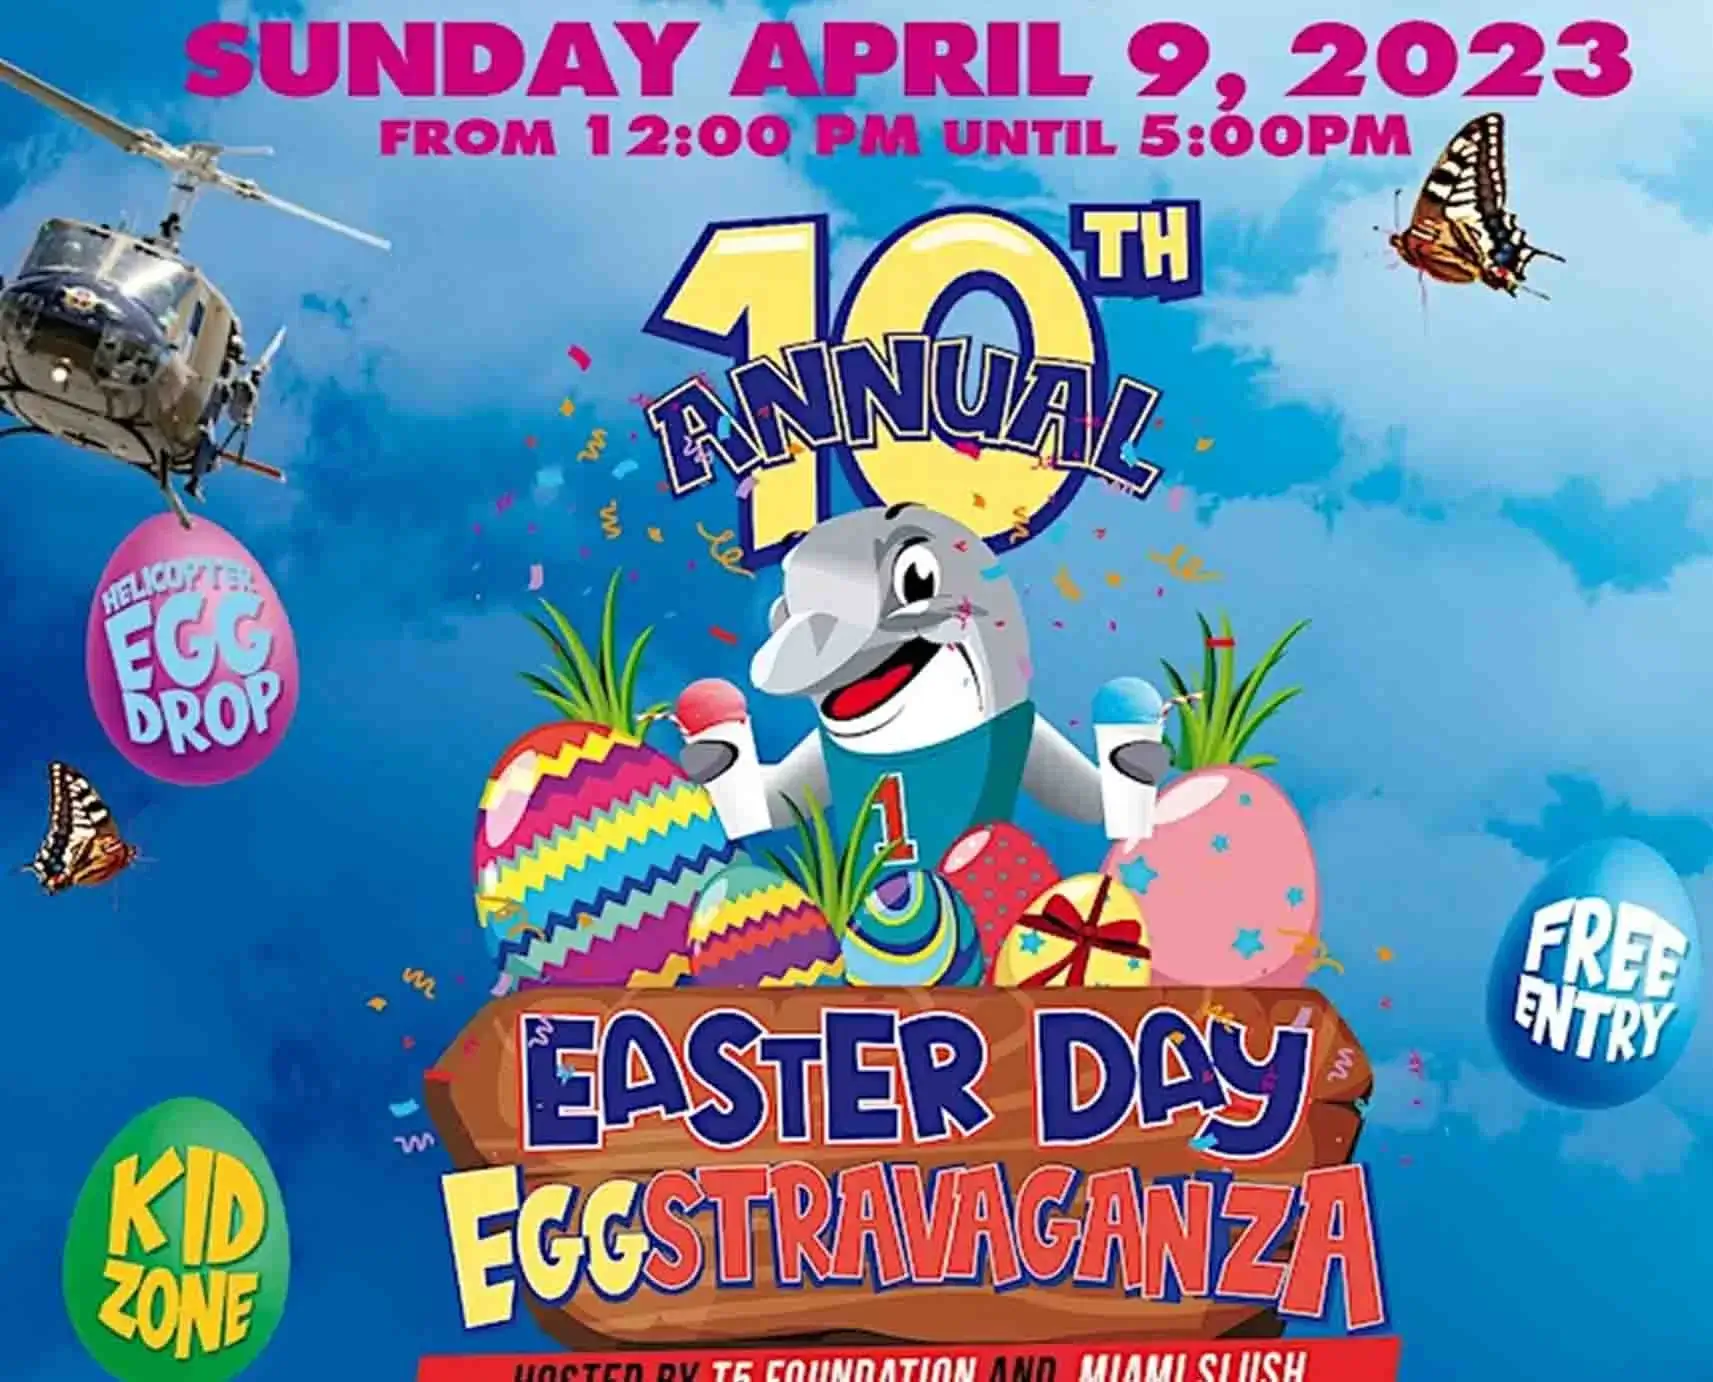 10th Annual Easter Day Eggstravaganza